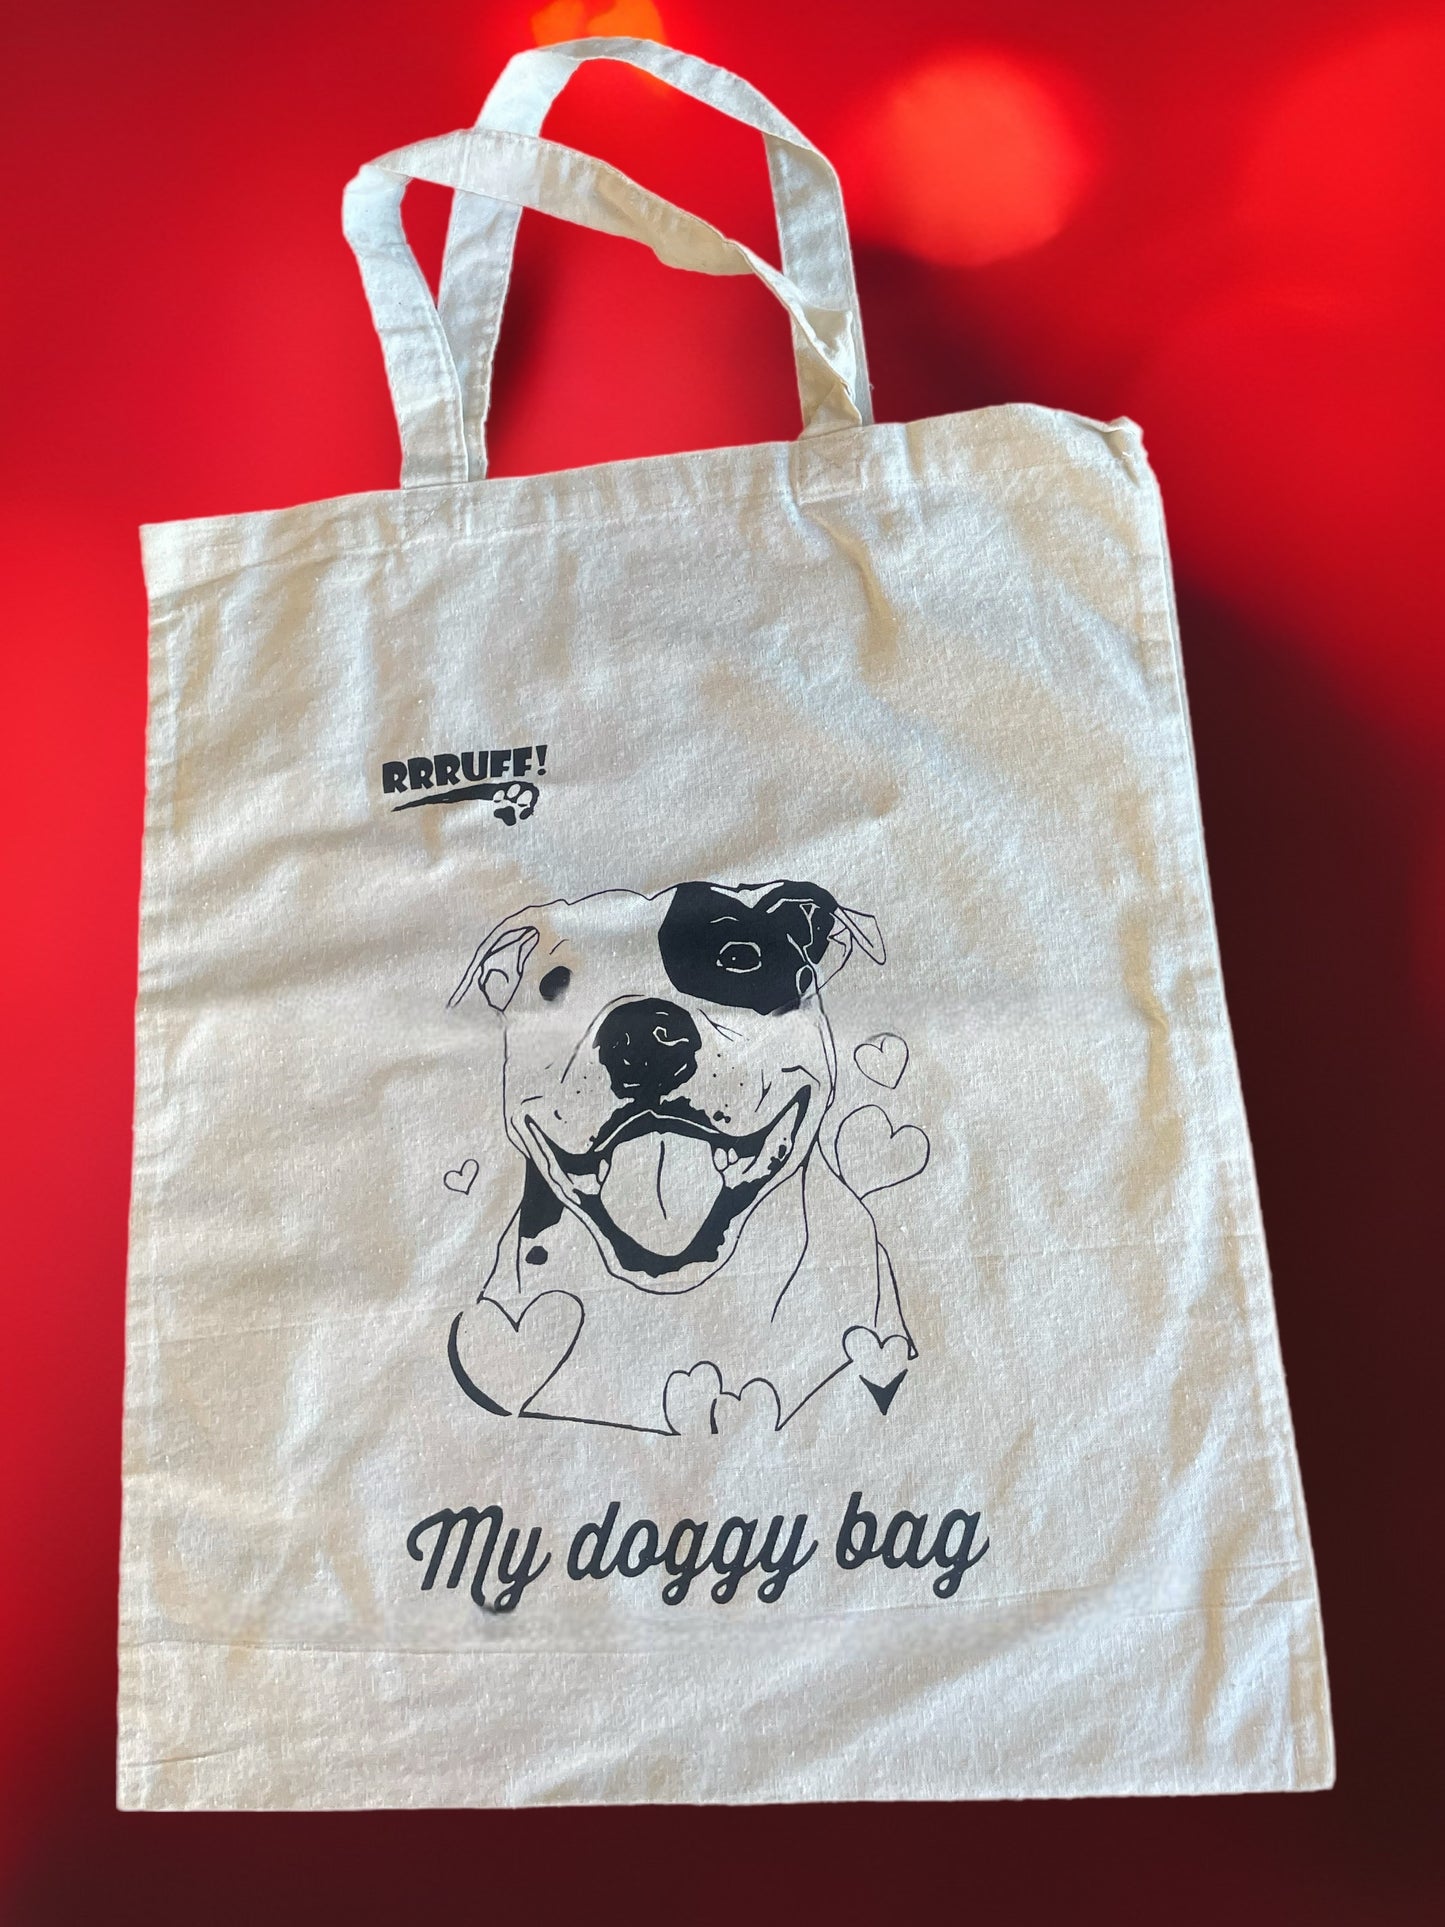 Calico tote bag staffy amstaff book bag shopping bag puppy doggy bag birthday gift